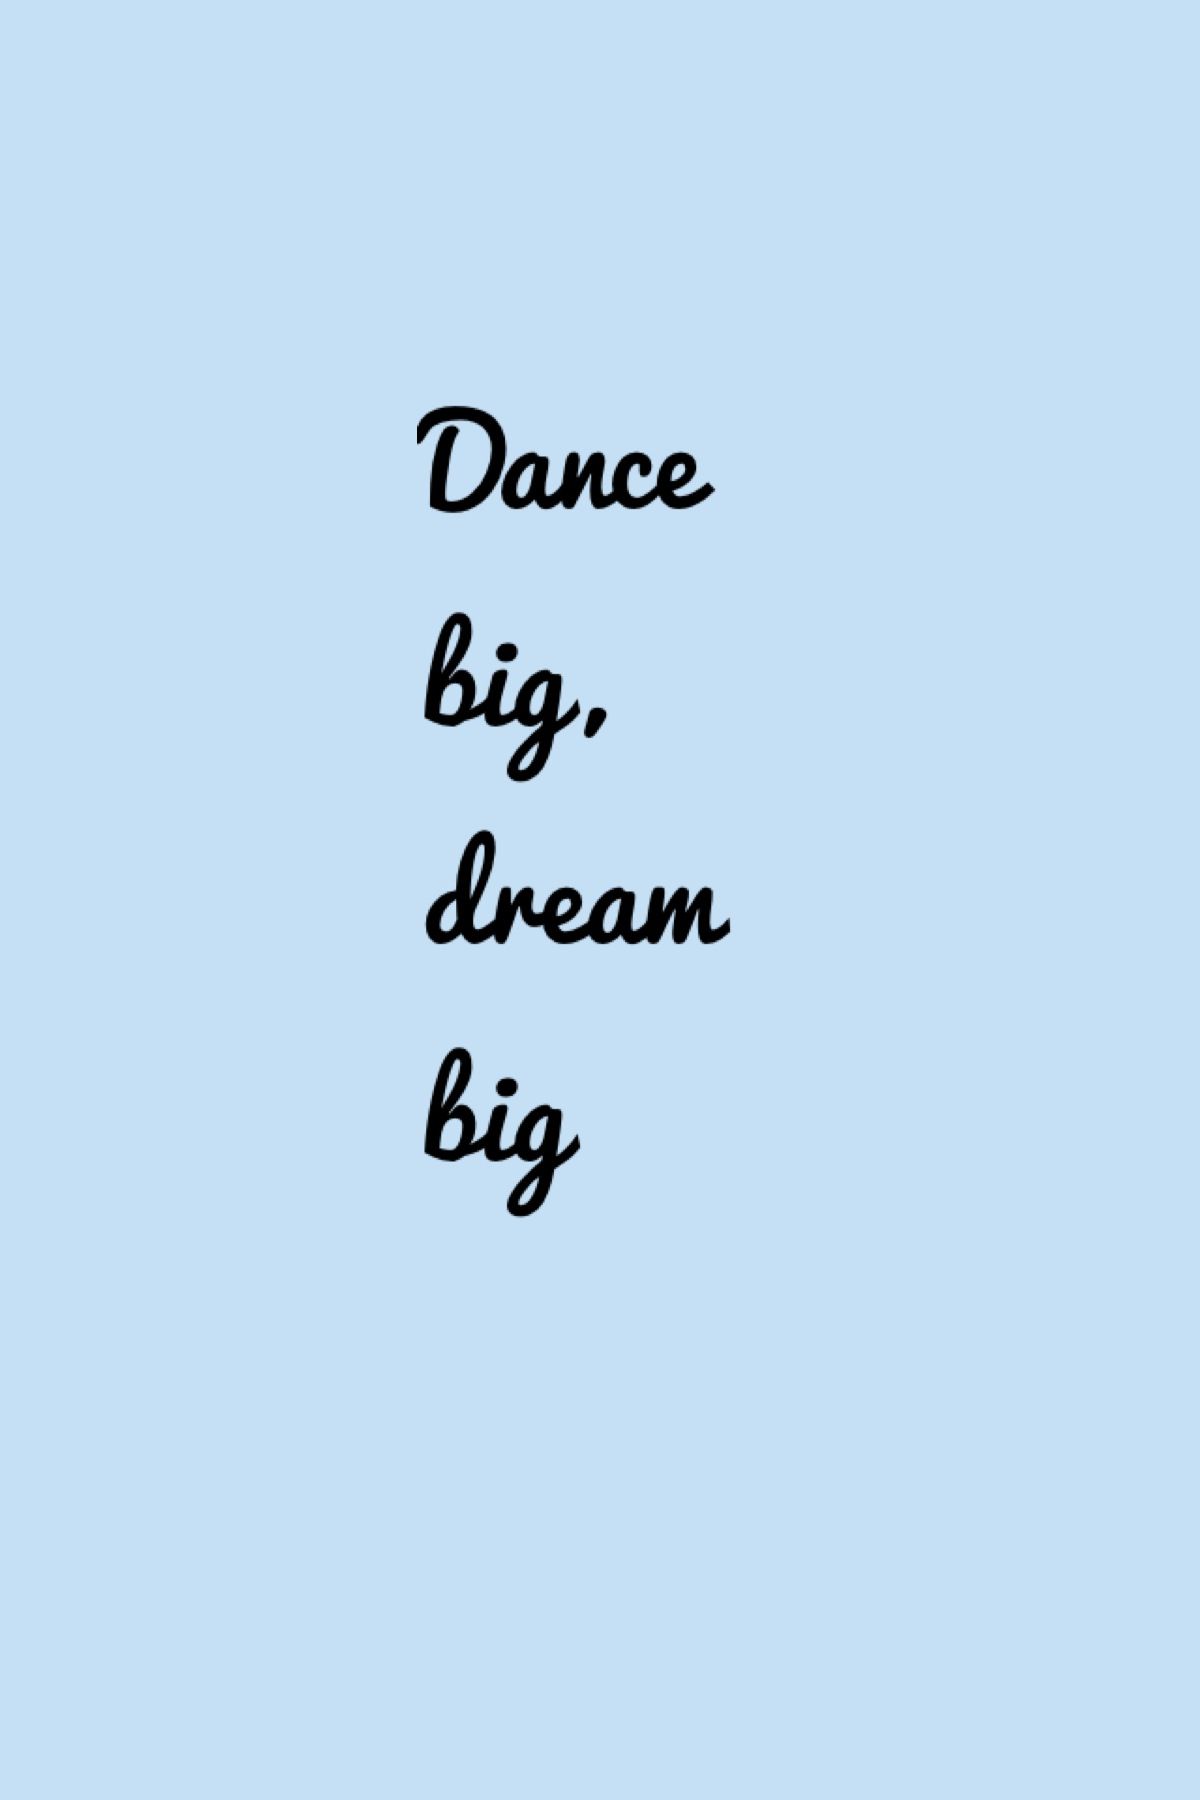 Dance big, dream big. - Dance